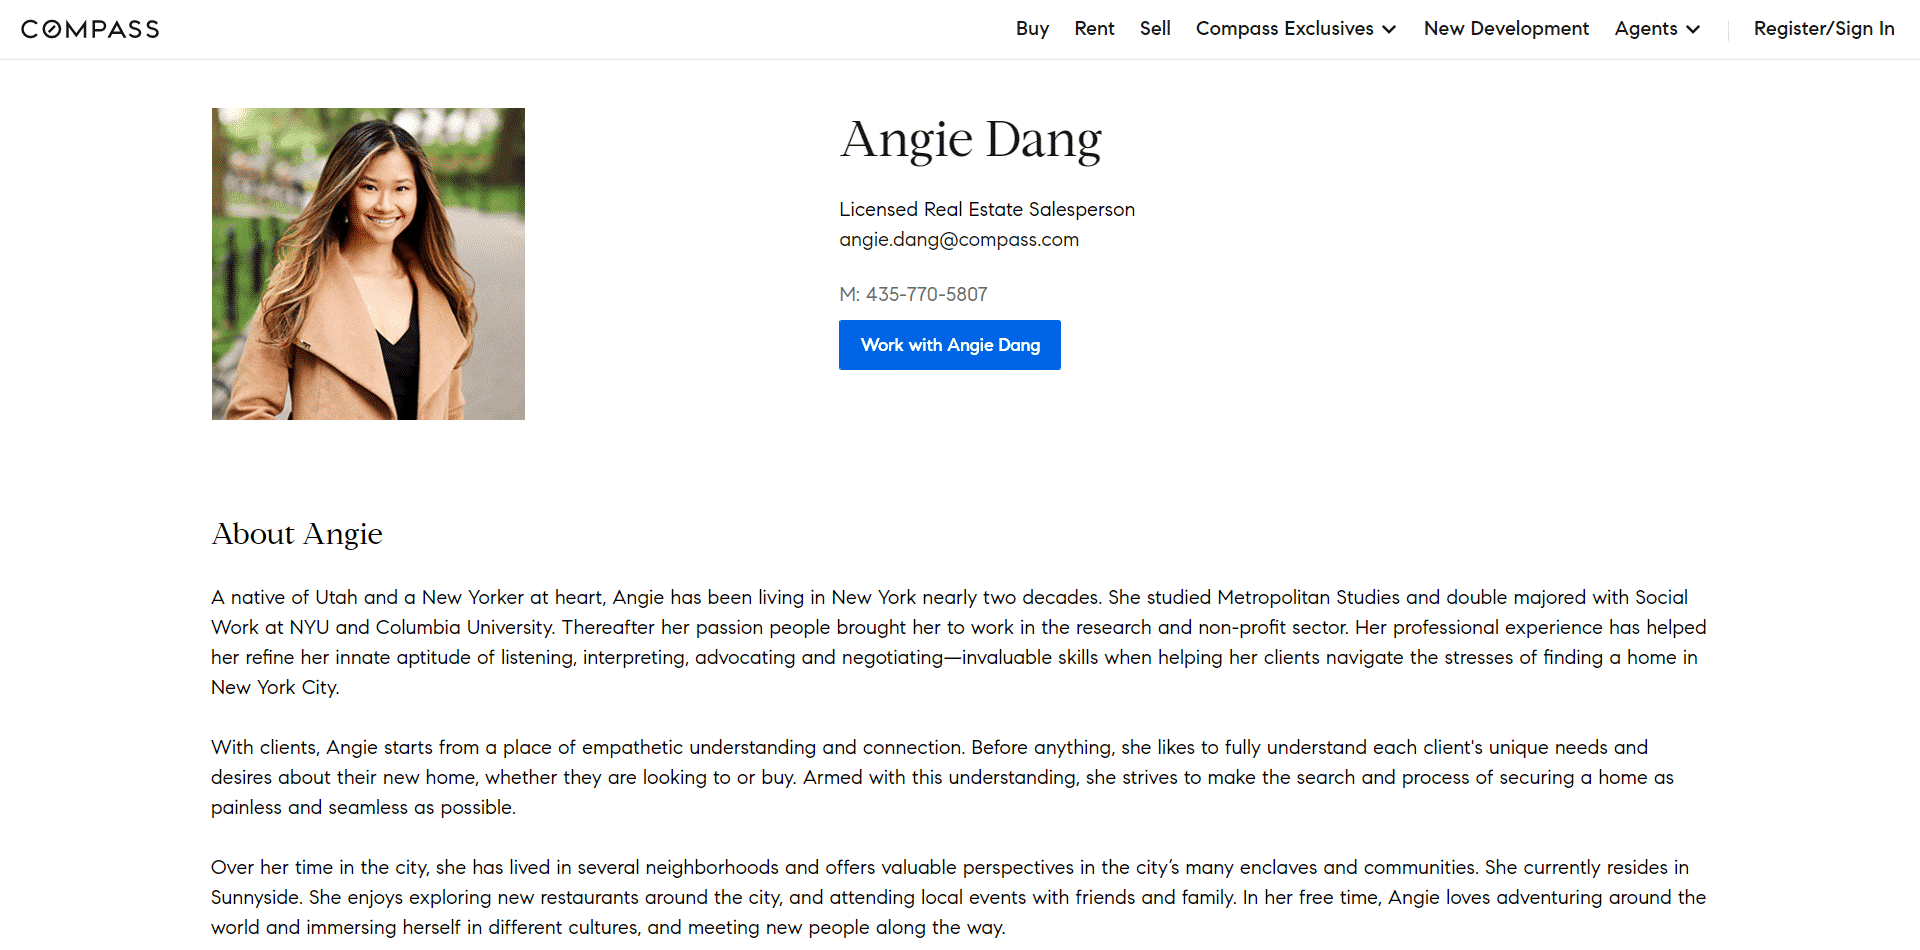 Angie Dang Profile